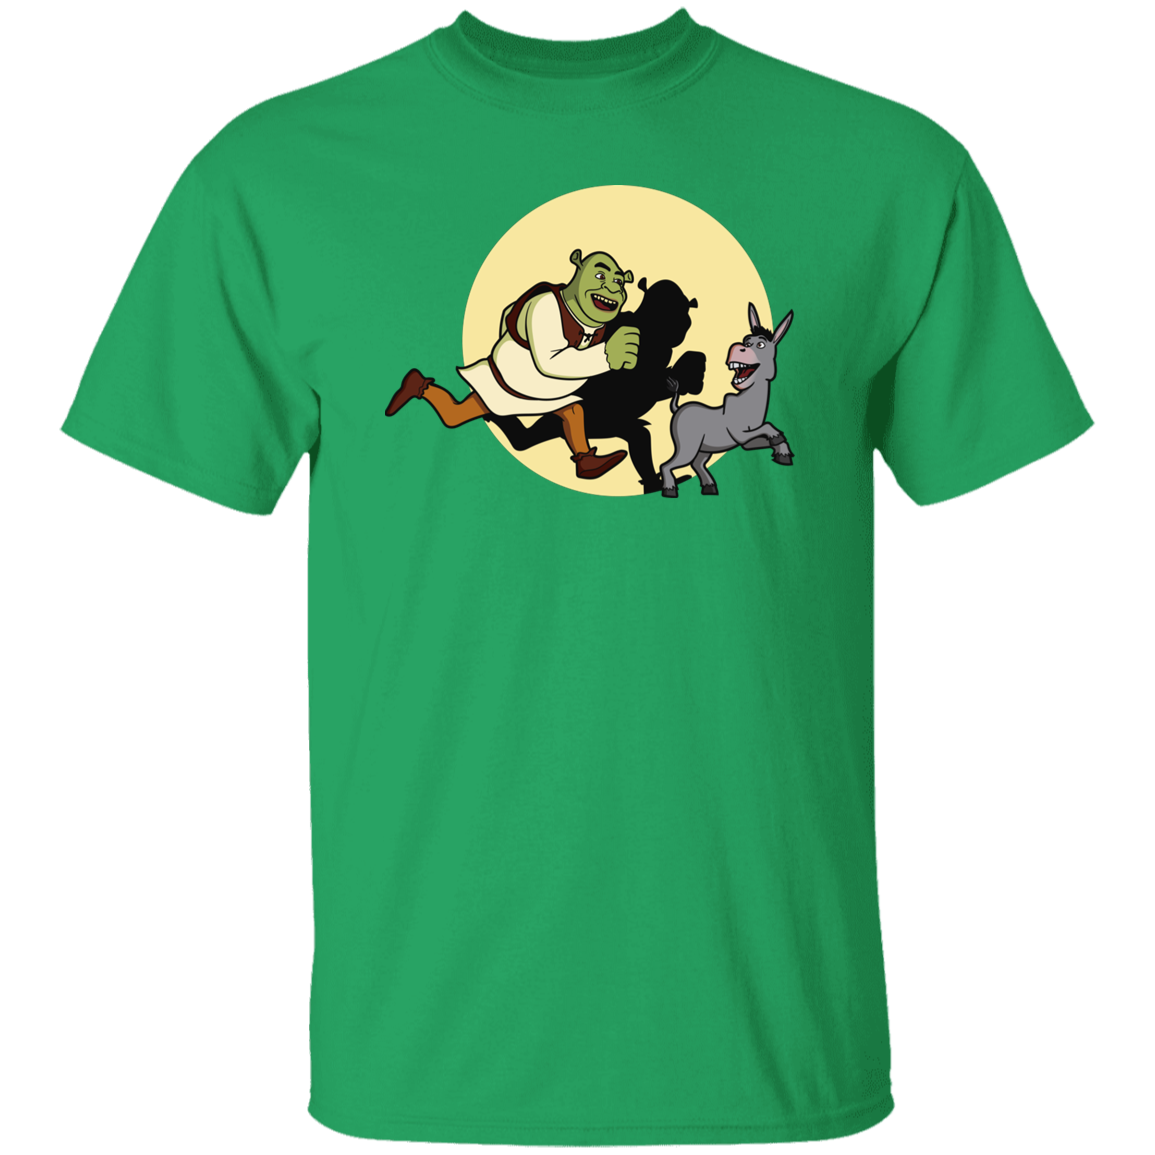 The Adventures of Shrek T-Shirt